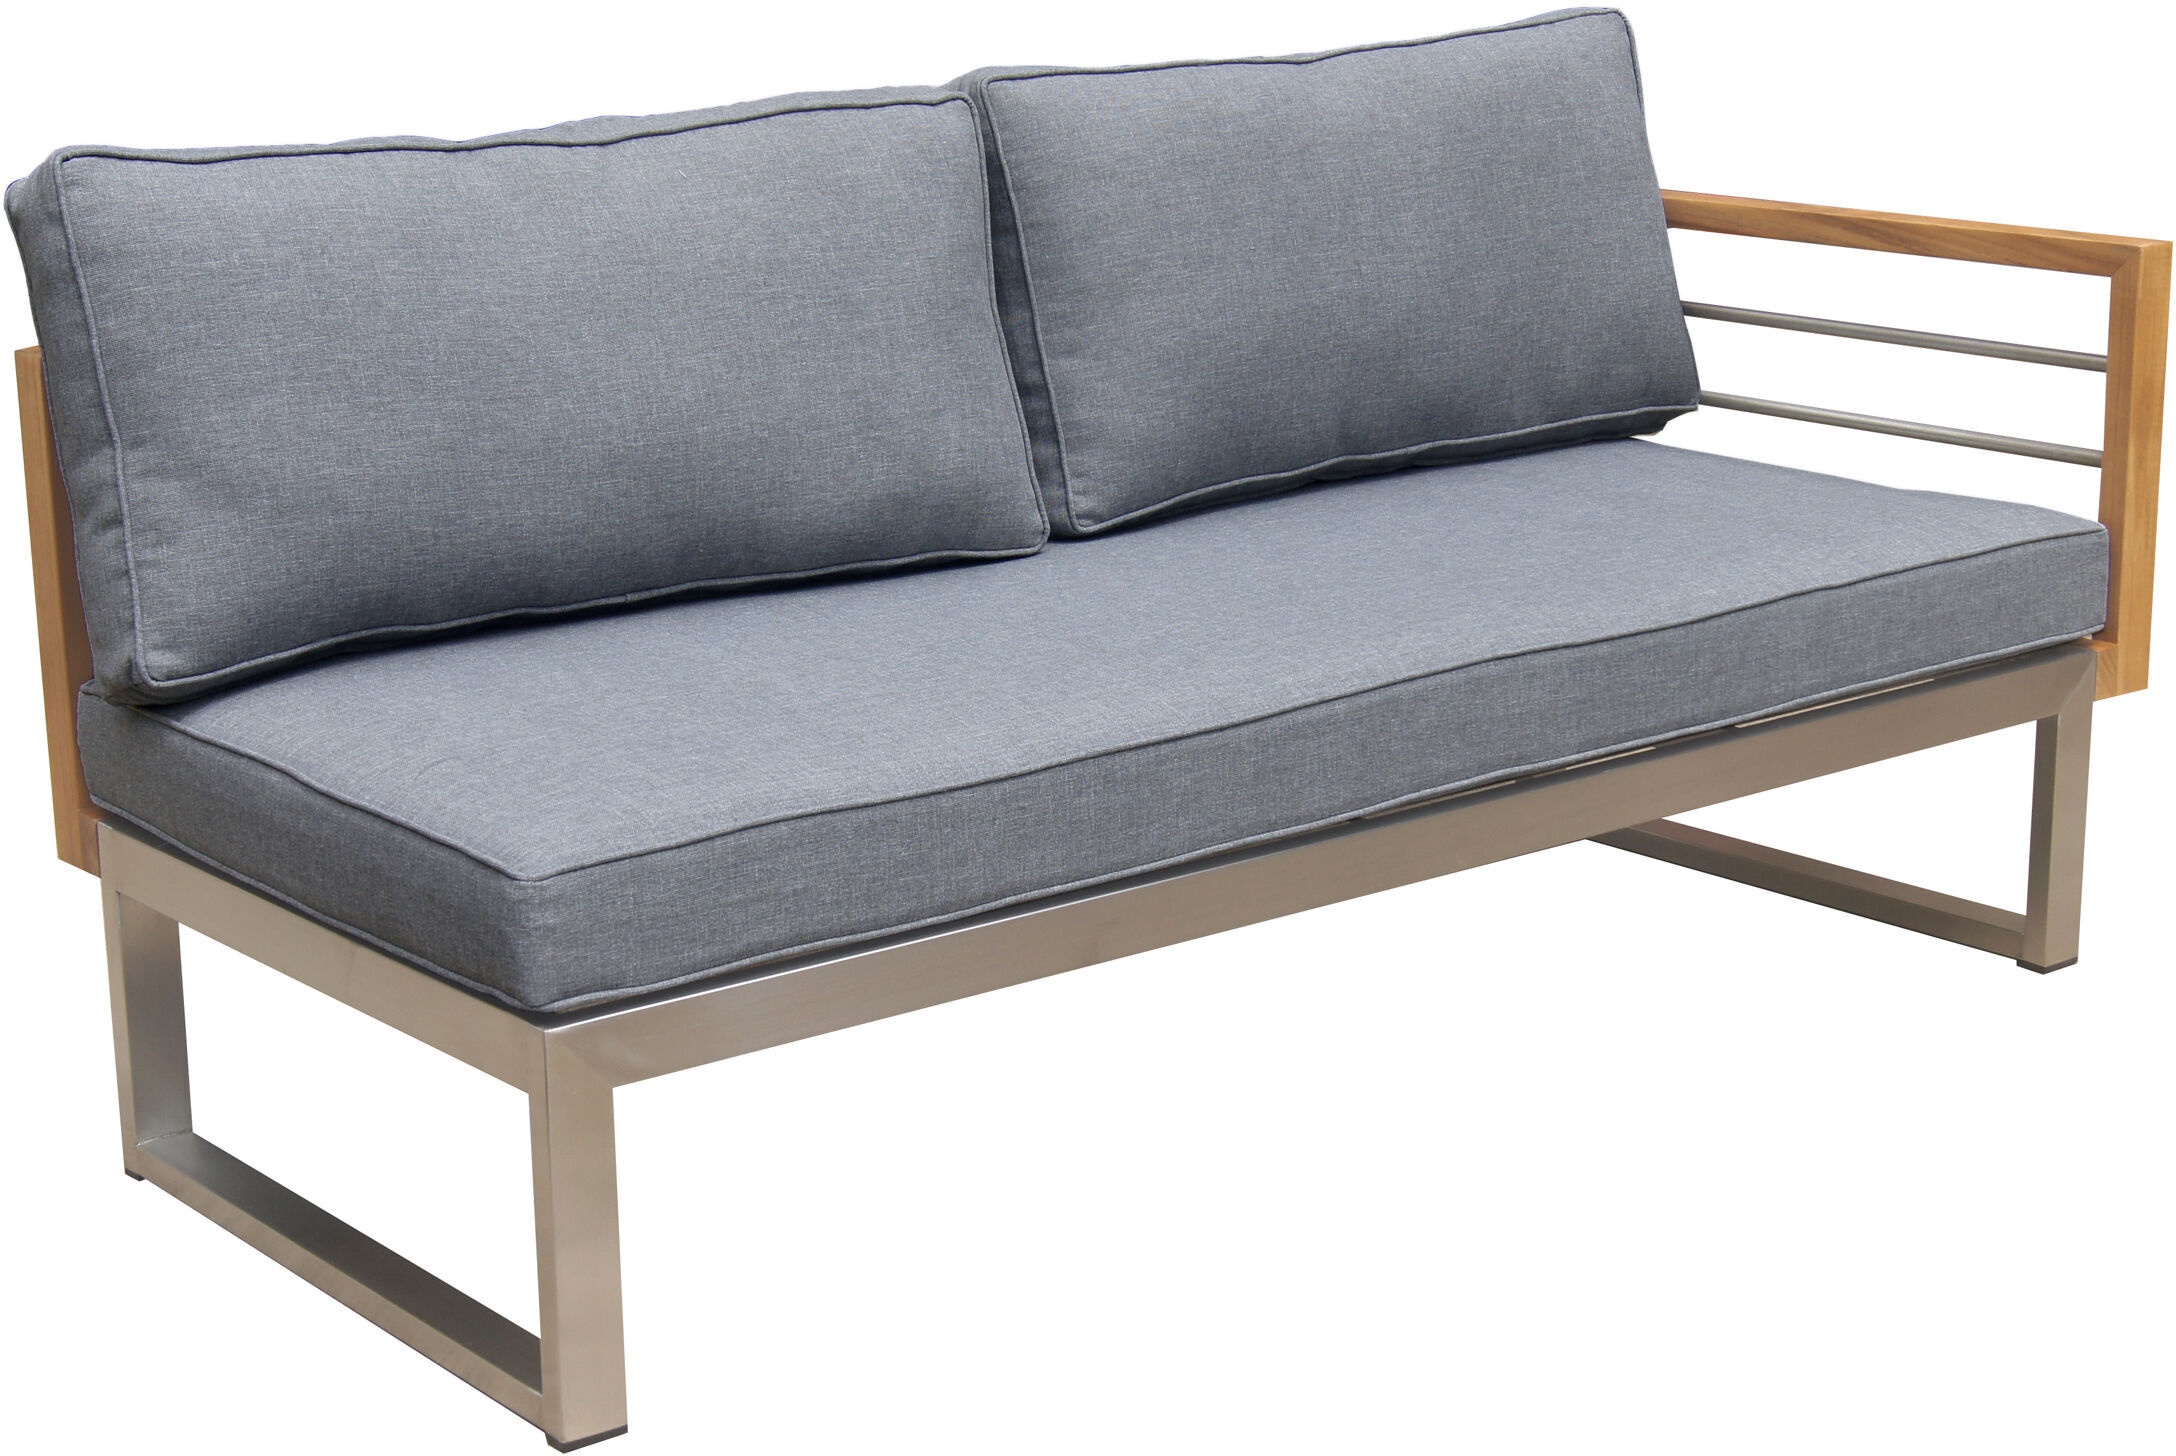 OUTFLEXX 2-Sitzer Sofa, natur / grau, FSC-Teak / Edelstahl / Olefin, 165x74x64 cm, Armlehne links